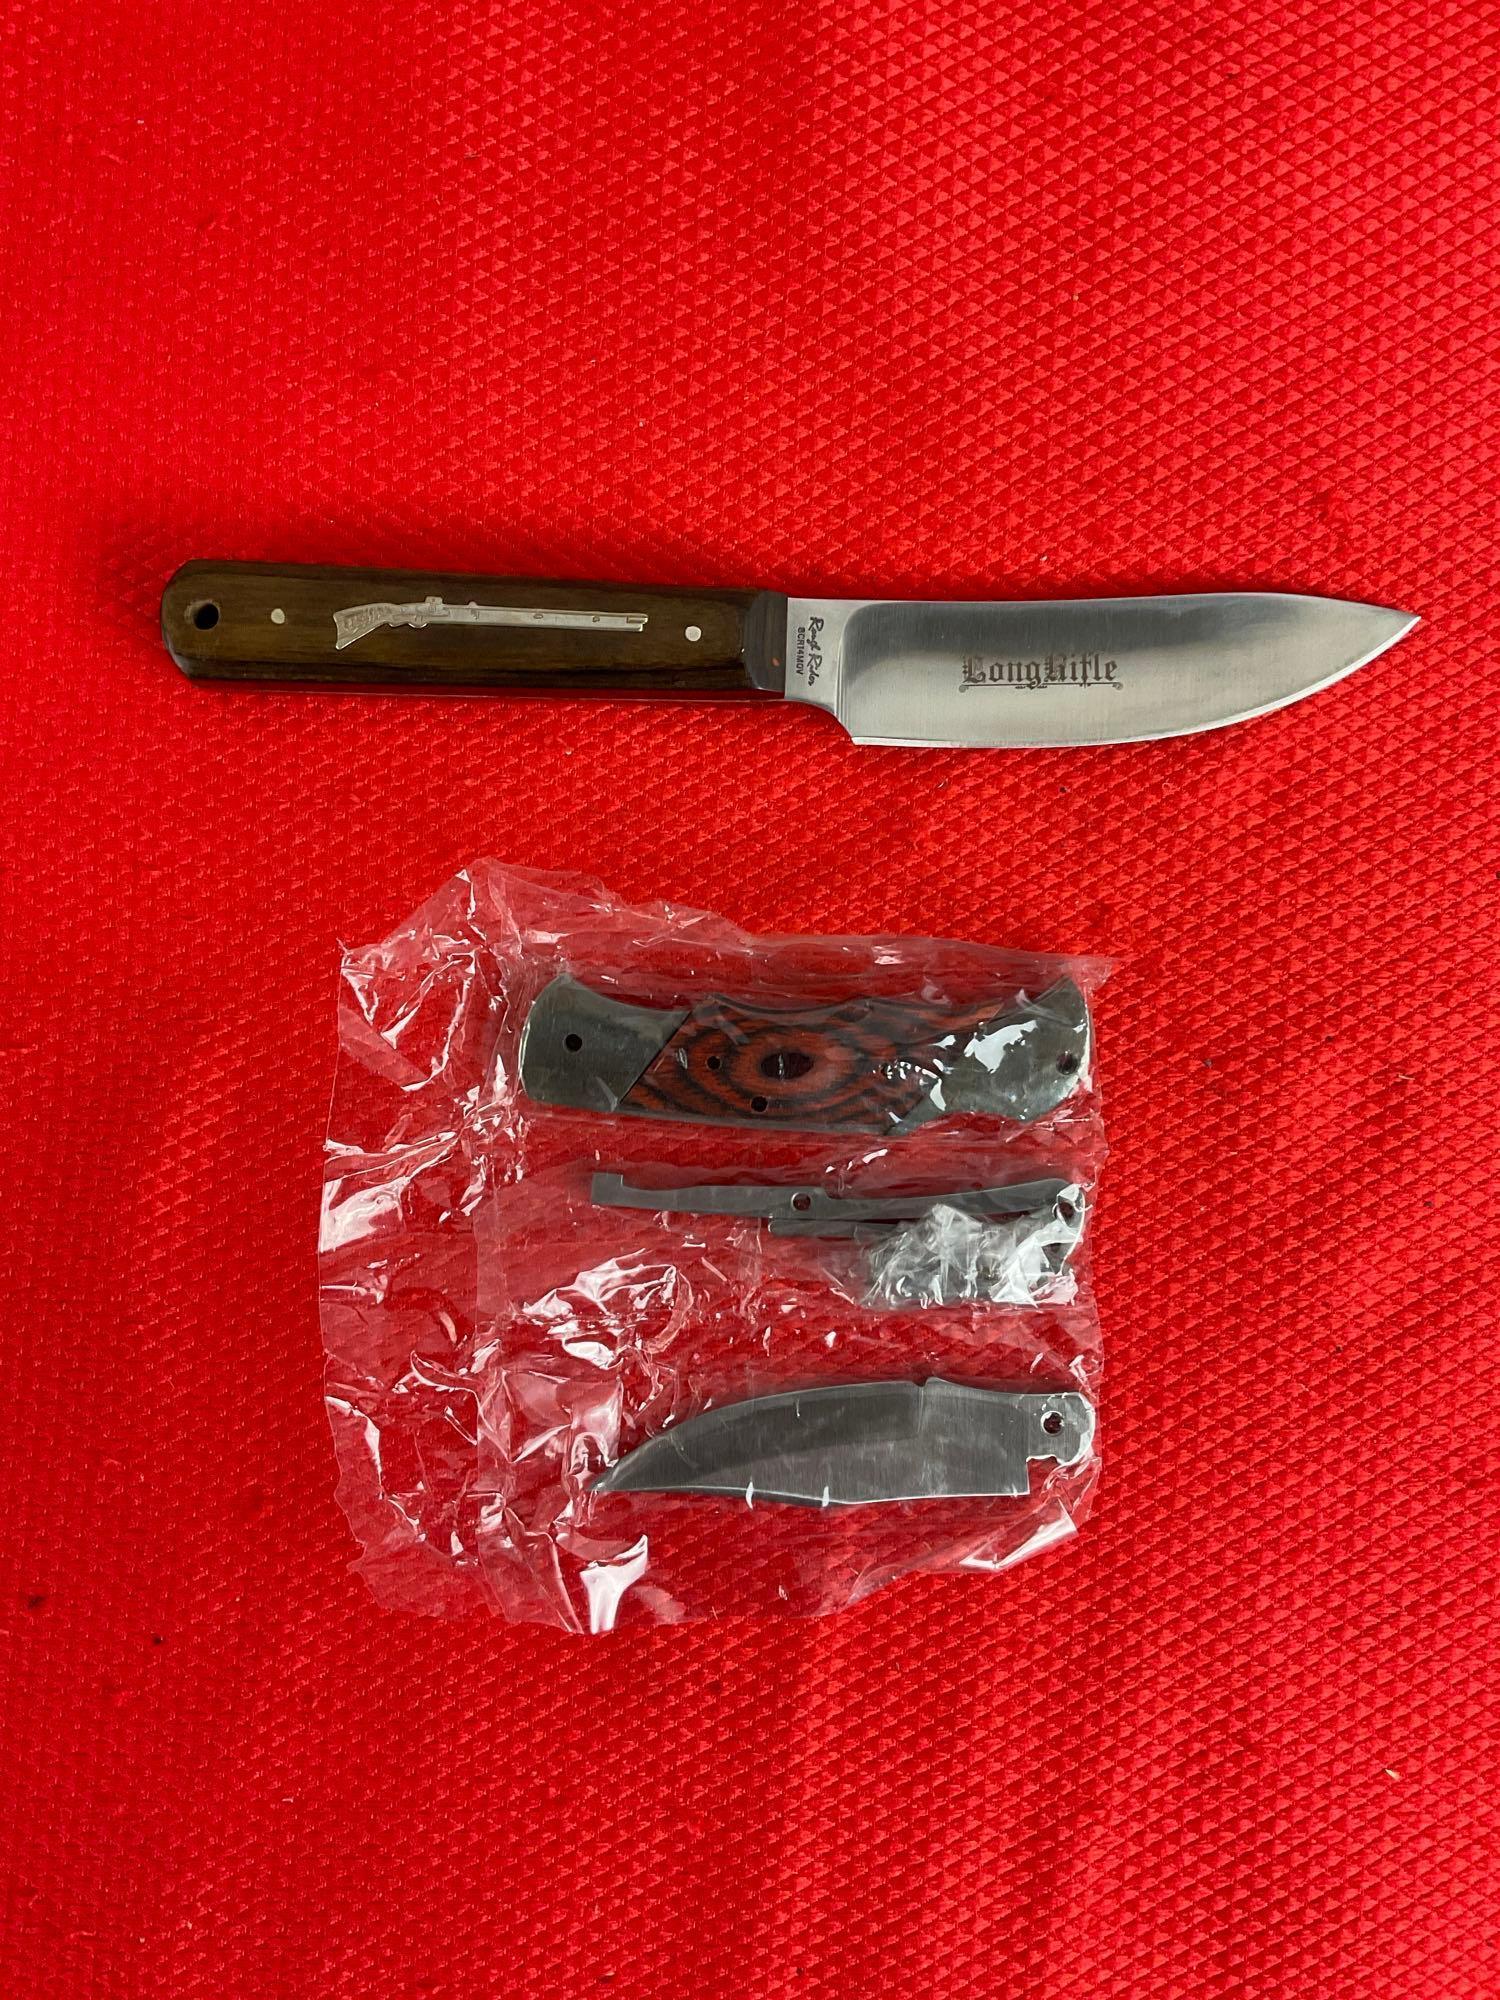 2 pcs Rough Rider Steel Knives Assortment Models RR610 Patch Knife & SO-RRCS4 Kit. NIB. See pics.